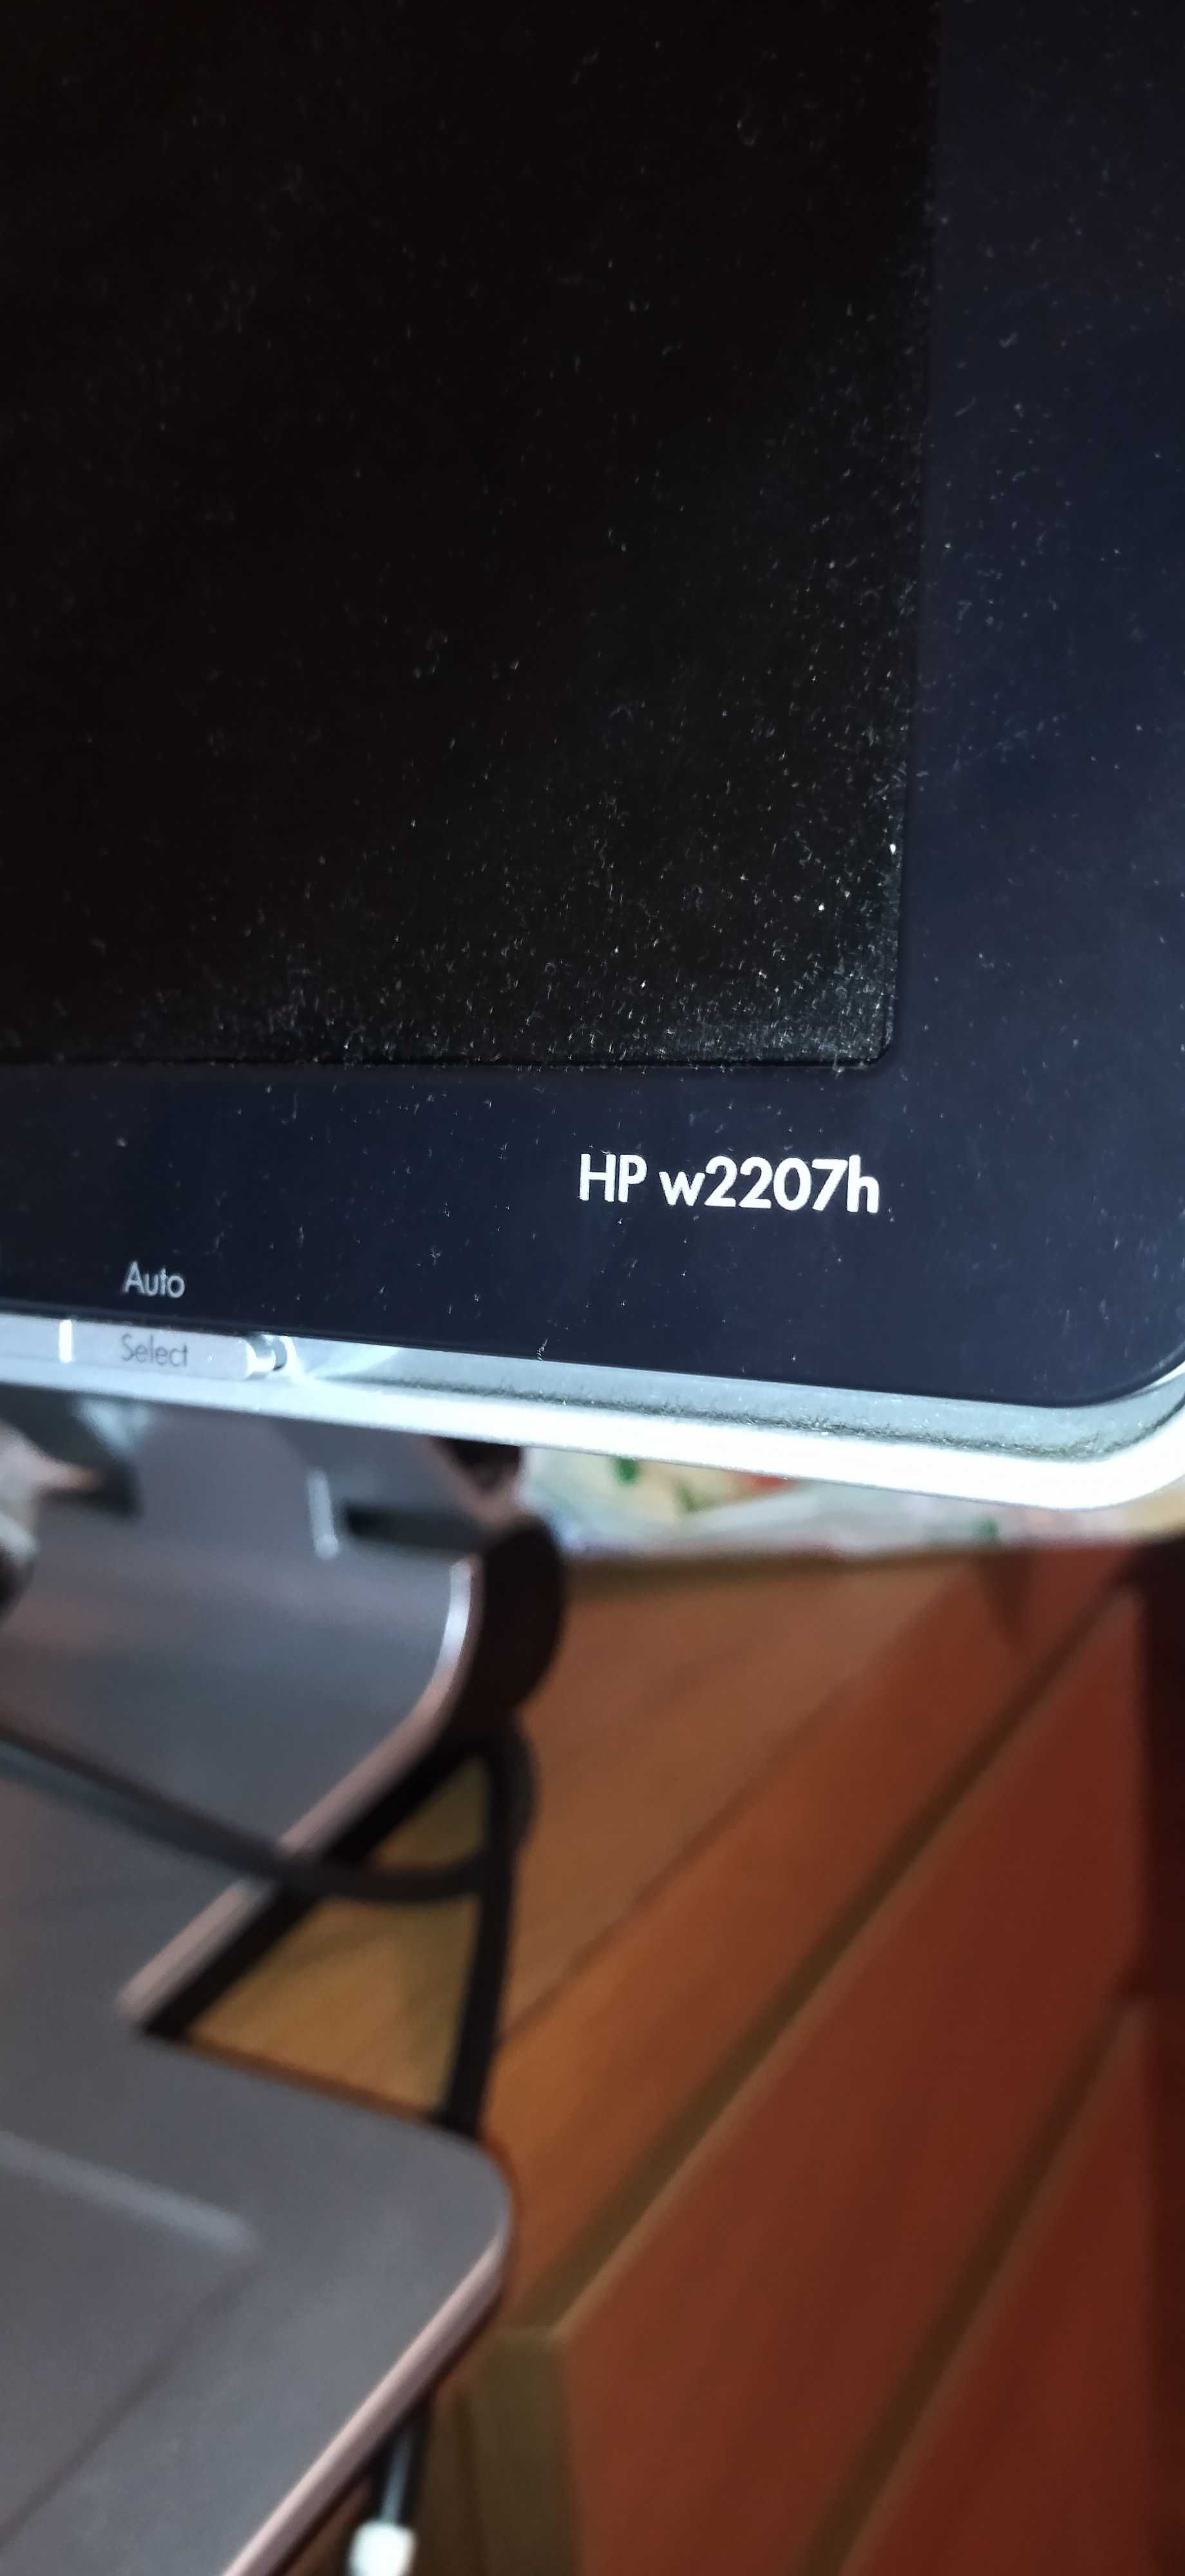 Monitor HP w2207h